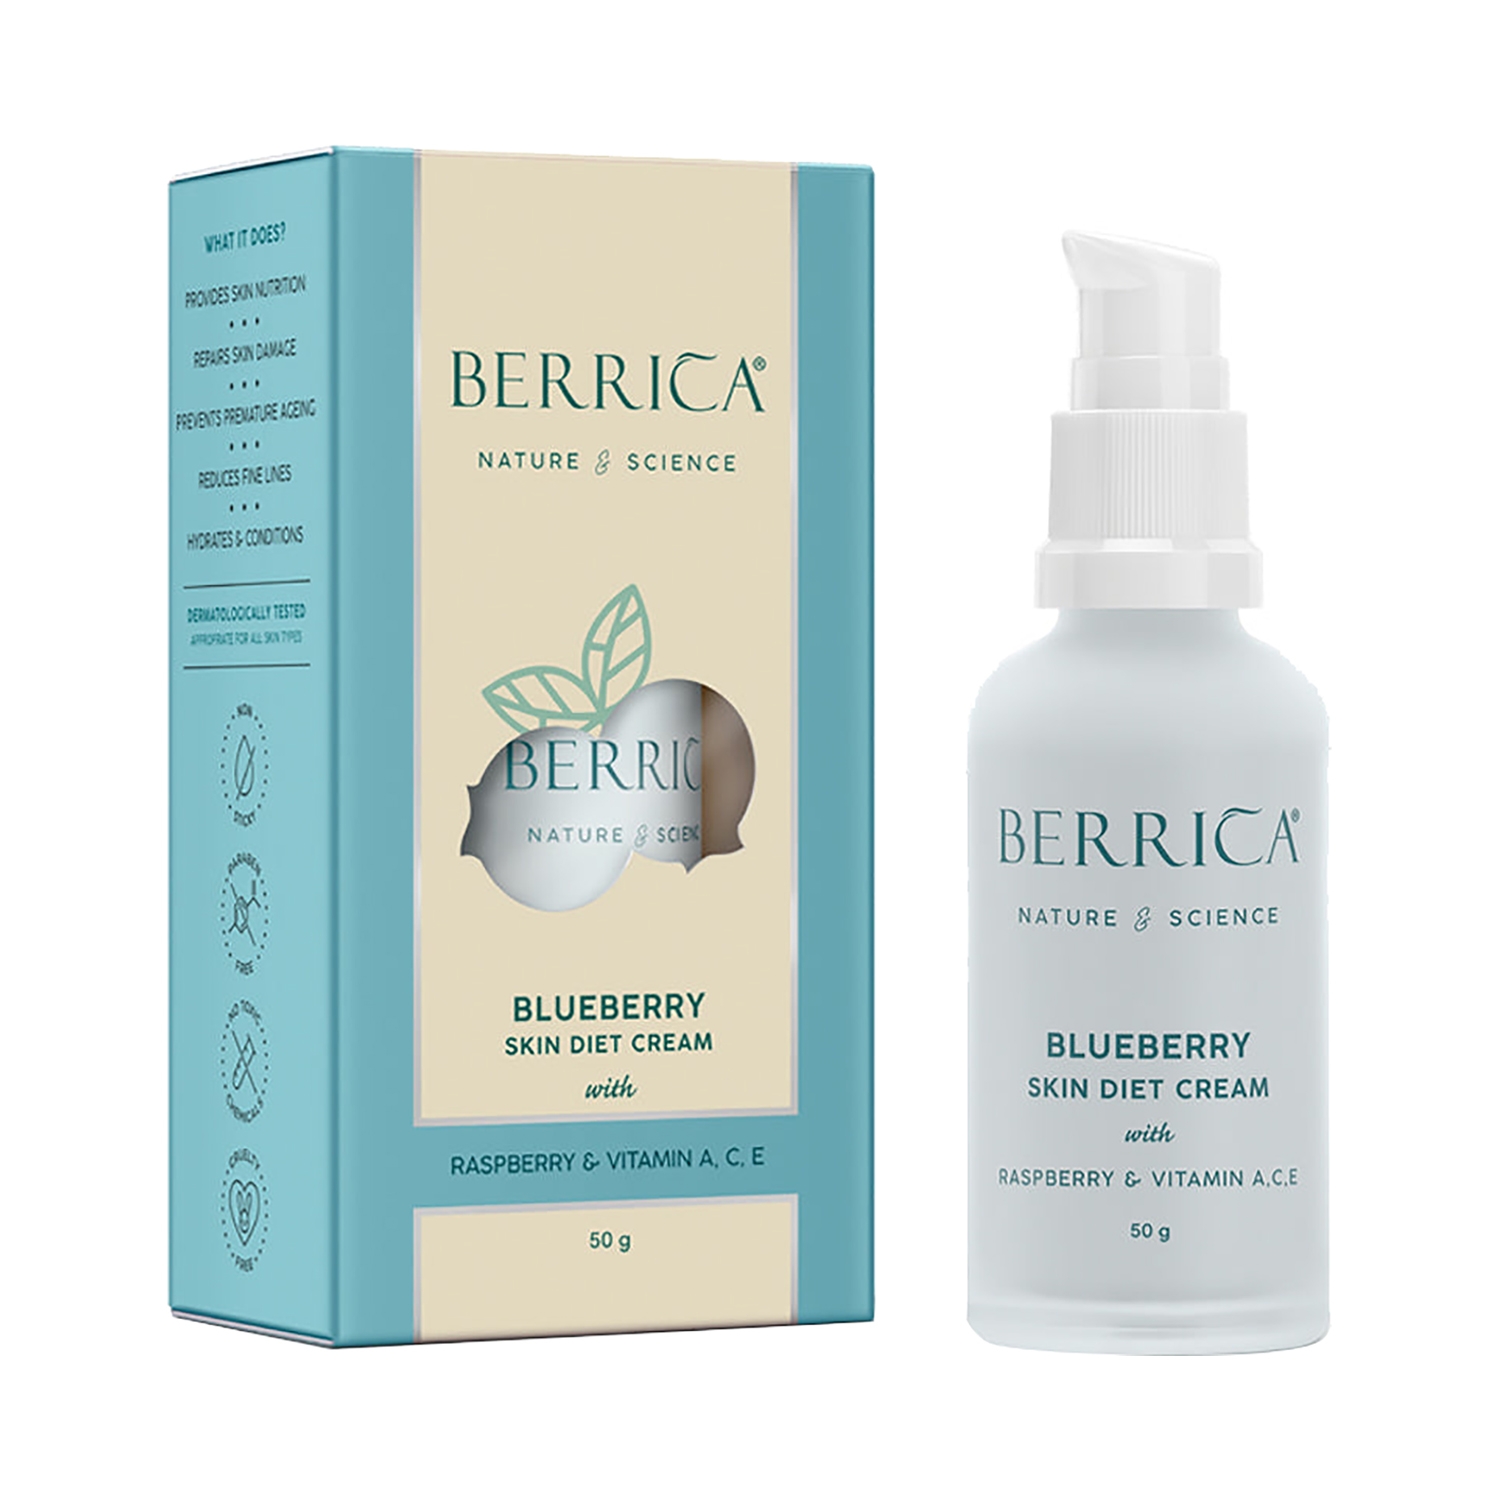 Berrica Blueberry Skin Diet Cream (50g)